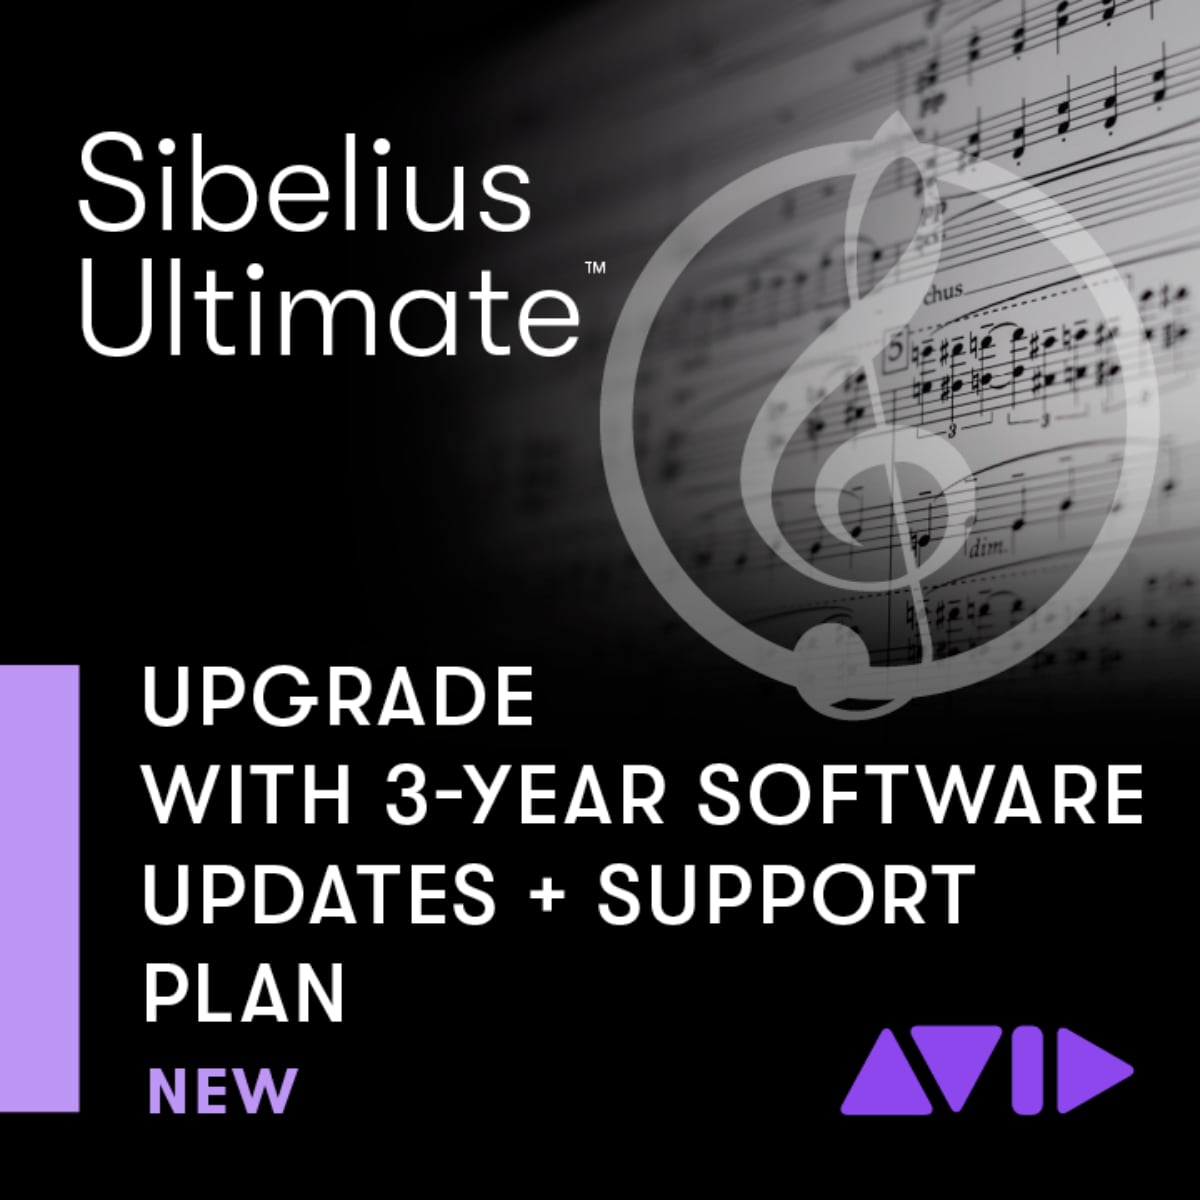 AVID Sibelius | Ultimate Upgrade 3-Years Software Updates + Support Plan - GET CURRENT